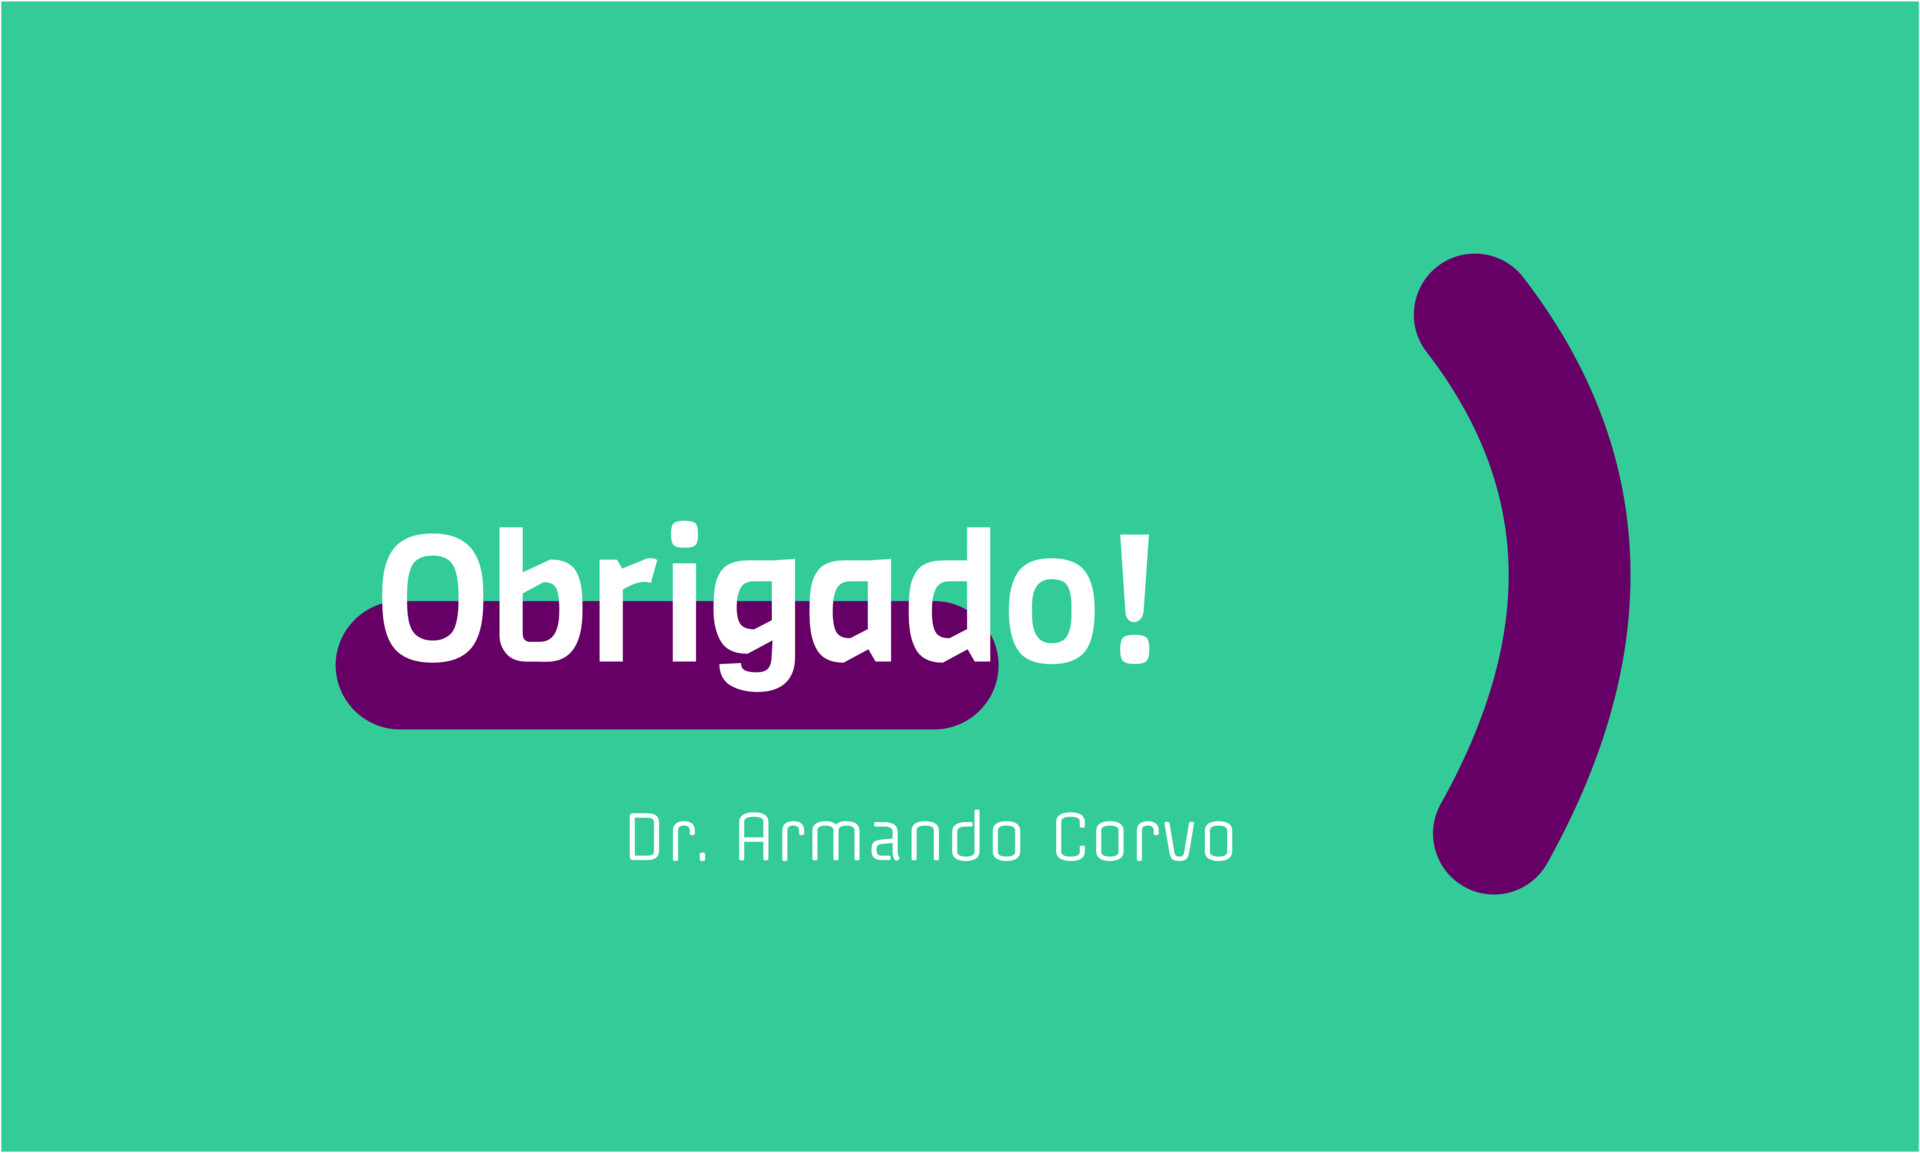 Dr. Armando Corvo